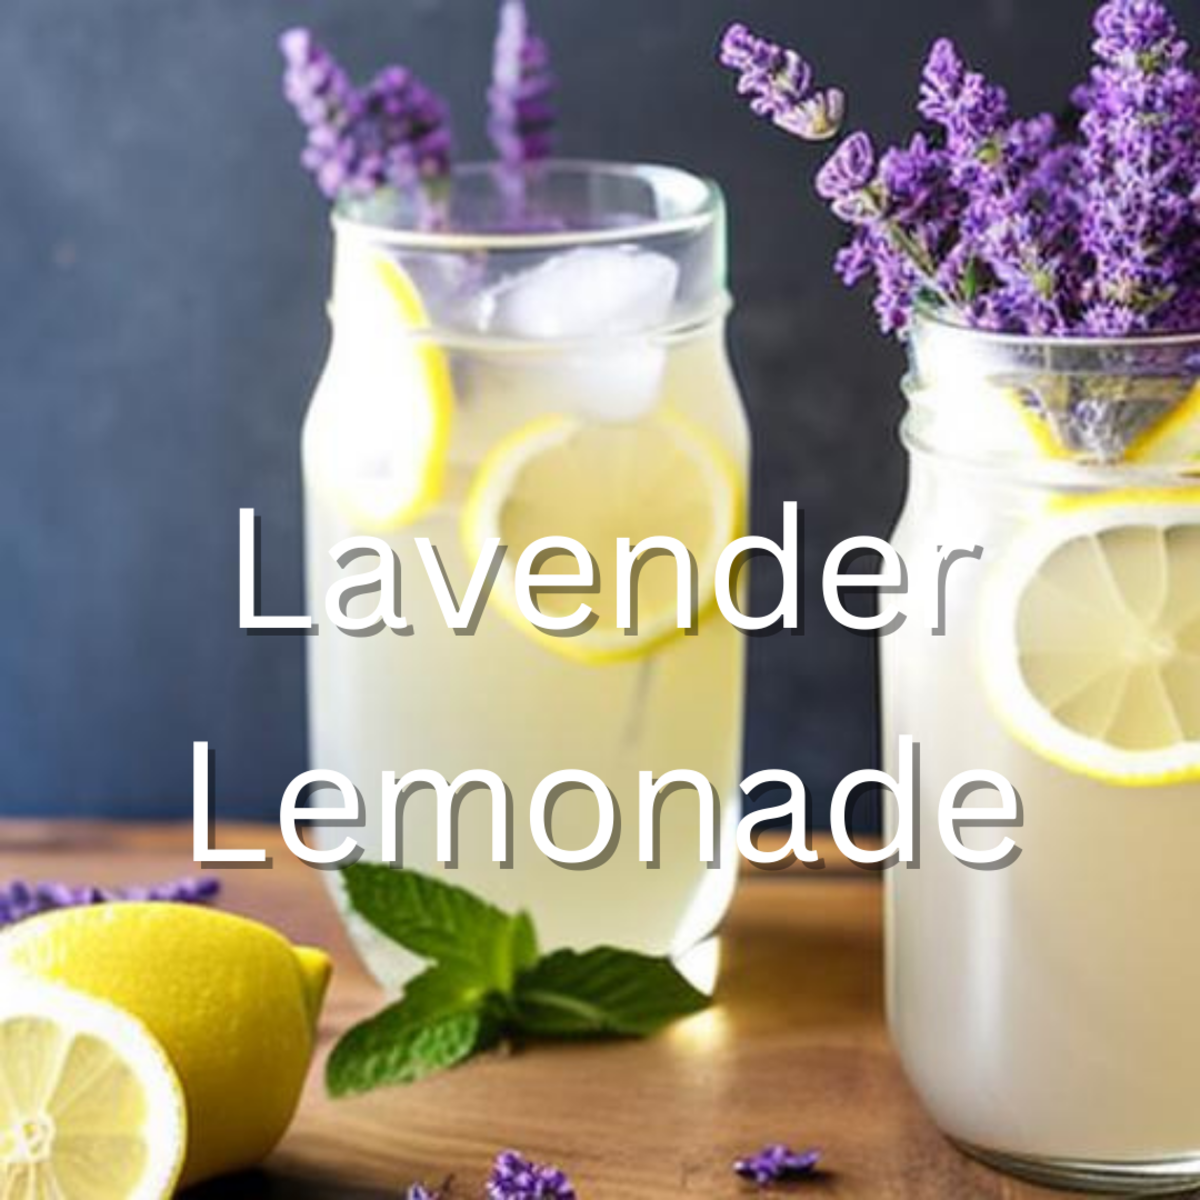 Southern-Style Lavender Lemonade